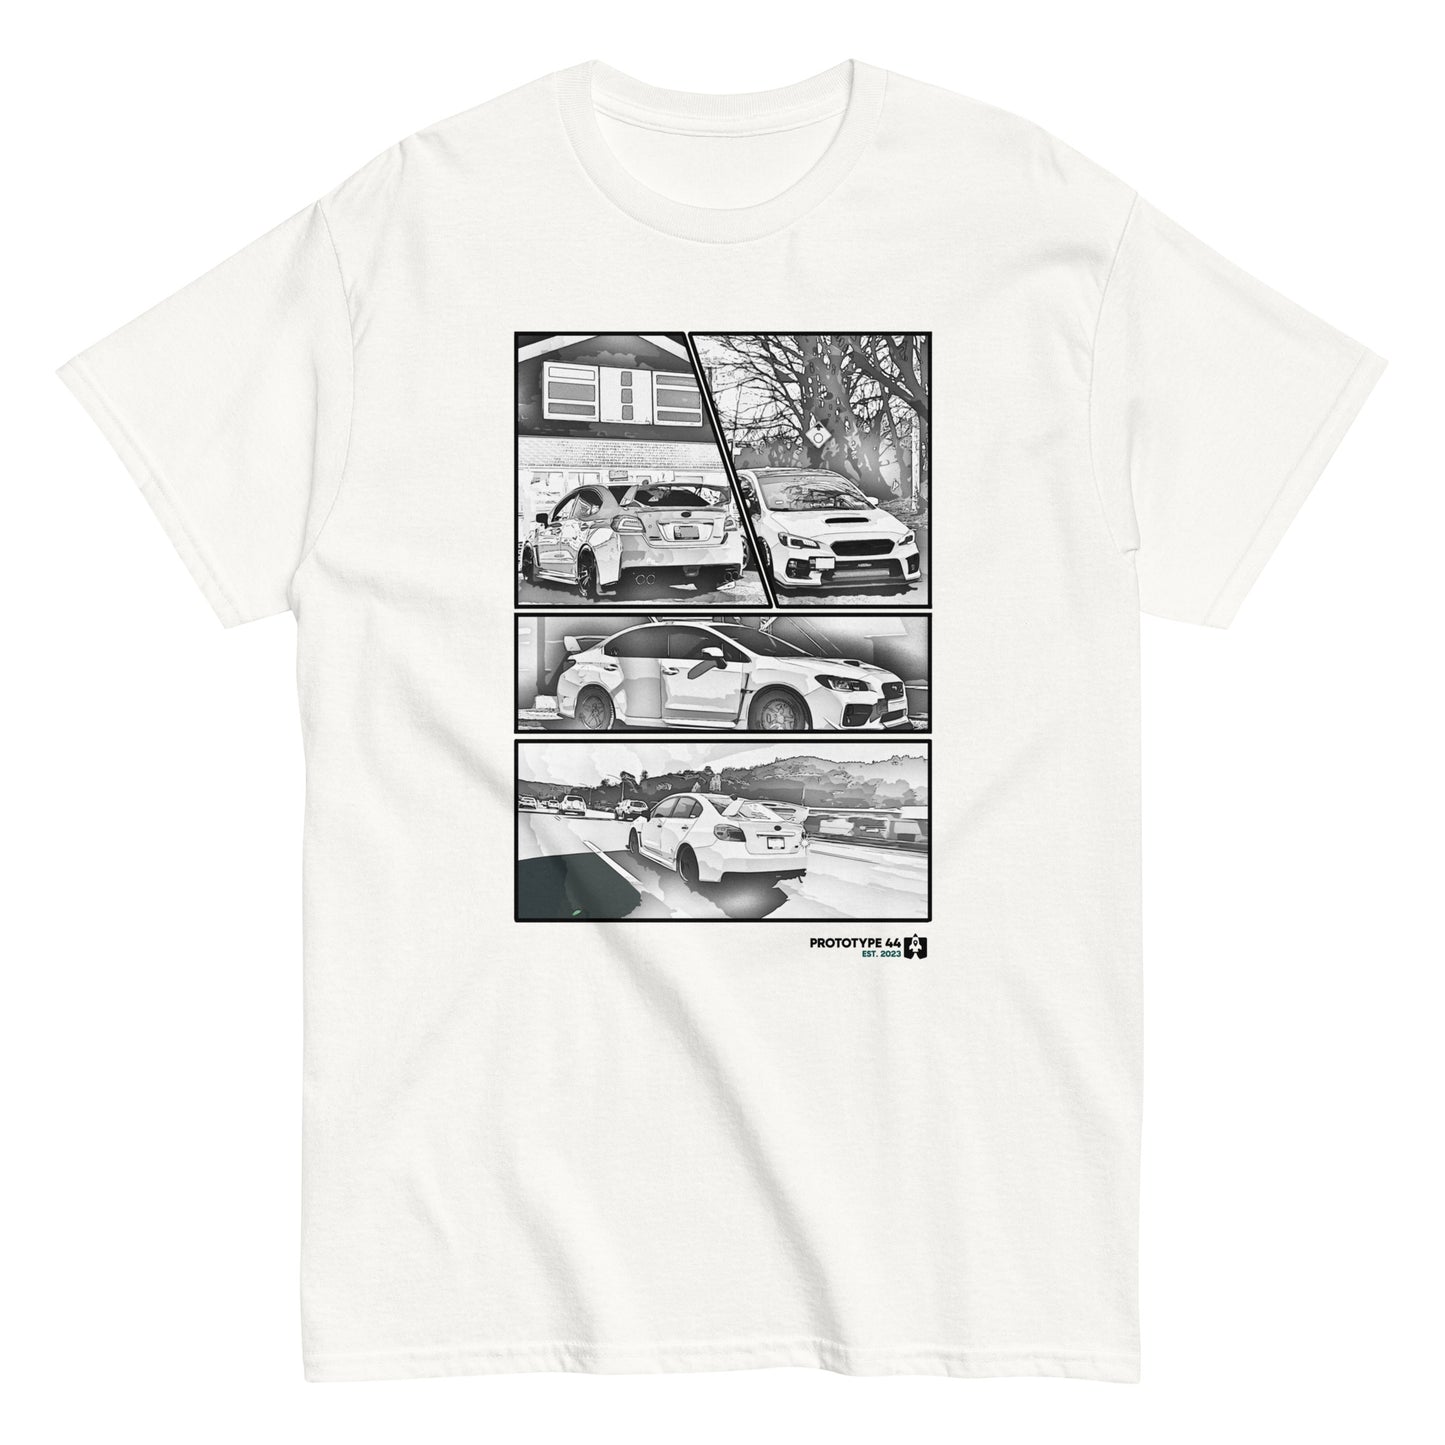 Subaru WRX STi T-shirt on a white surface